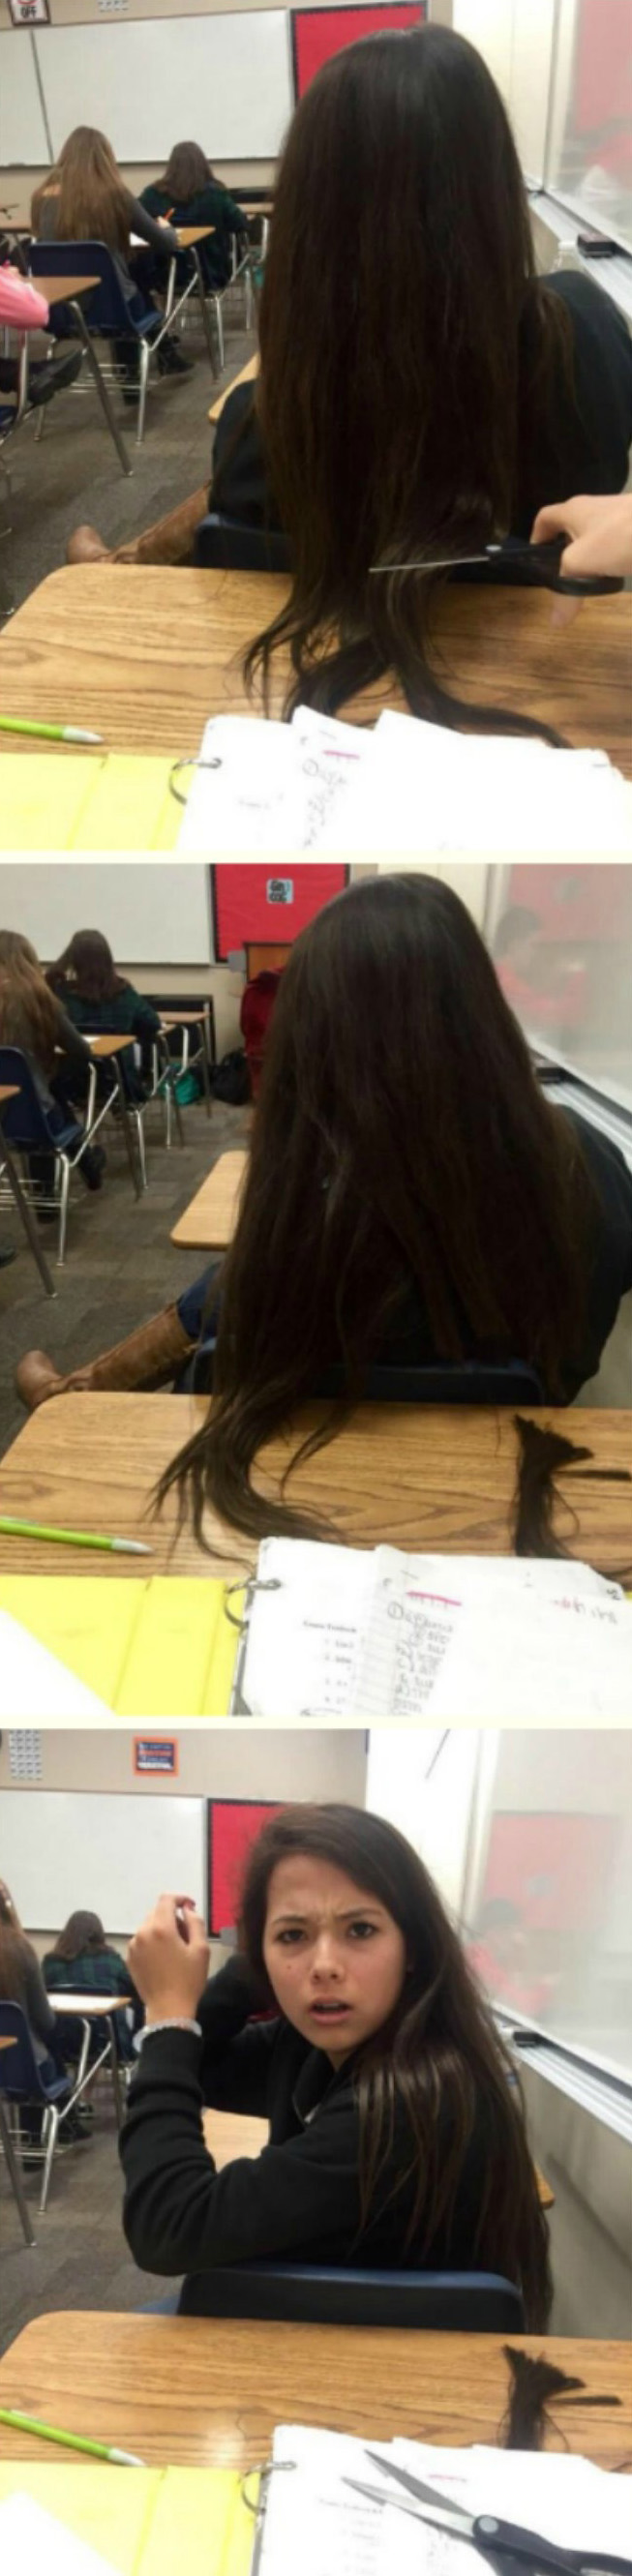 guy cuts girls hair on desk